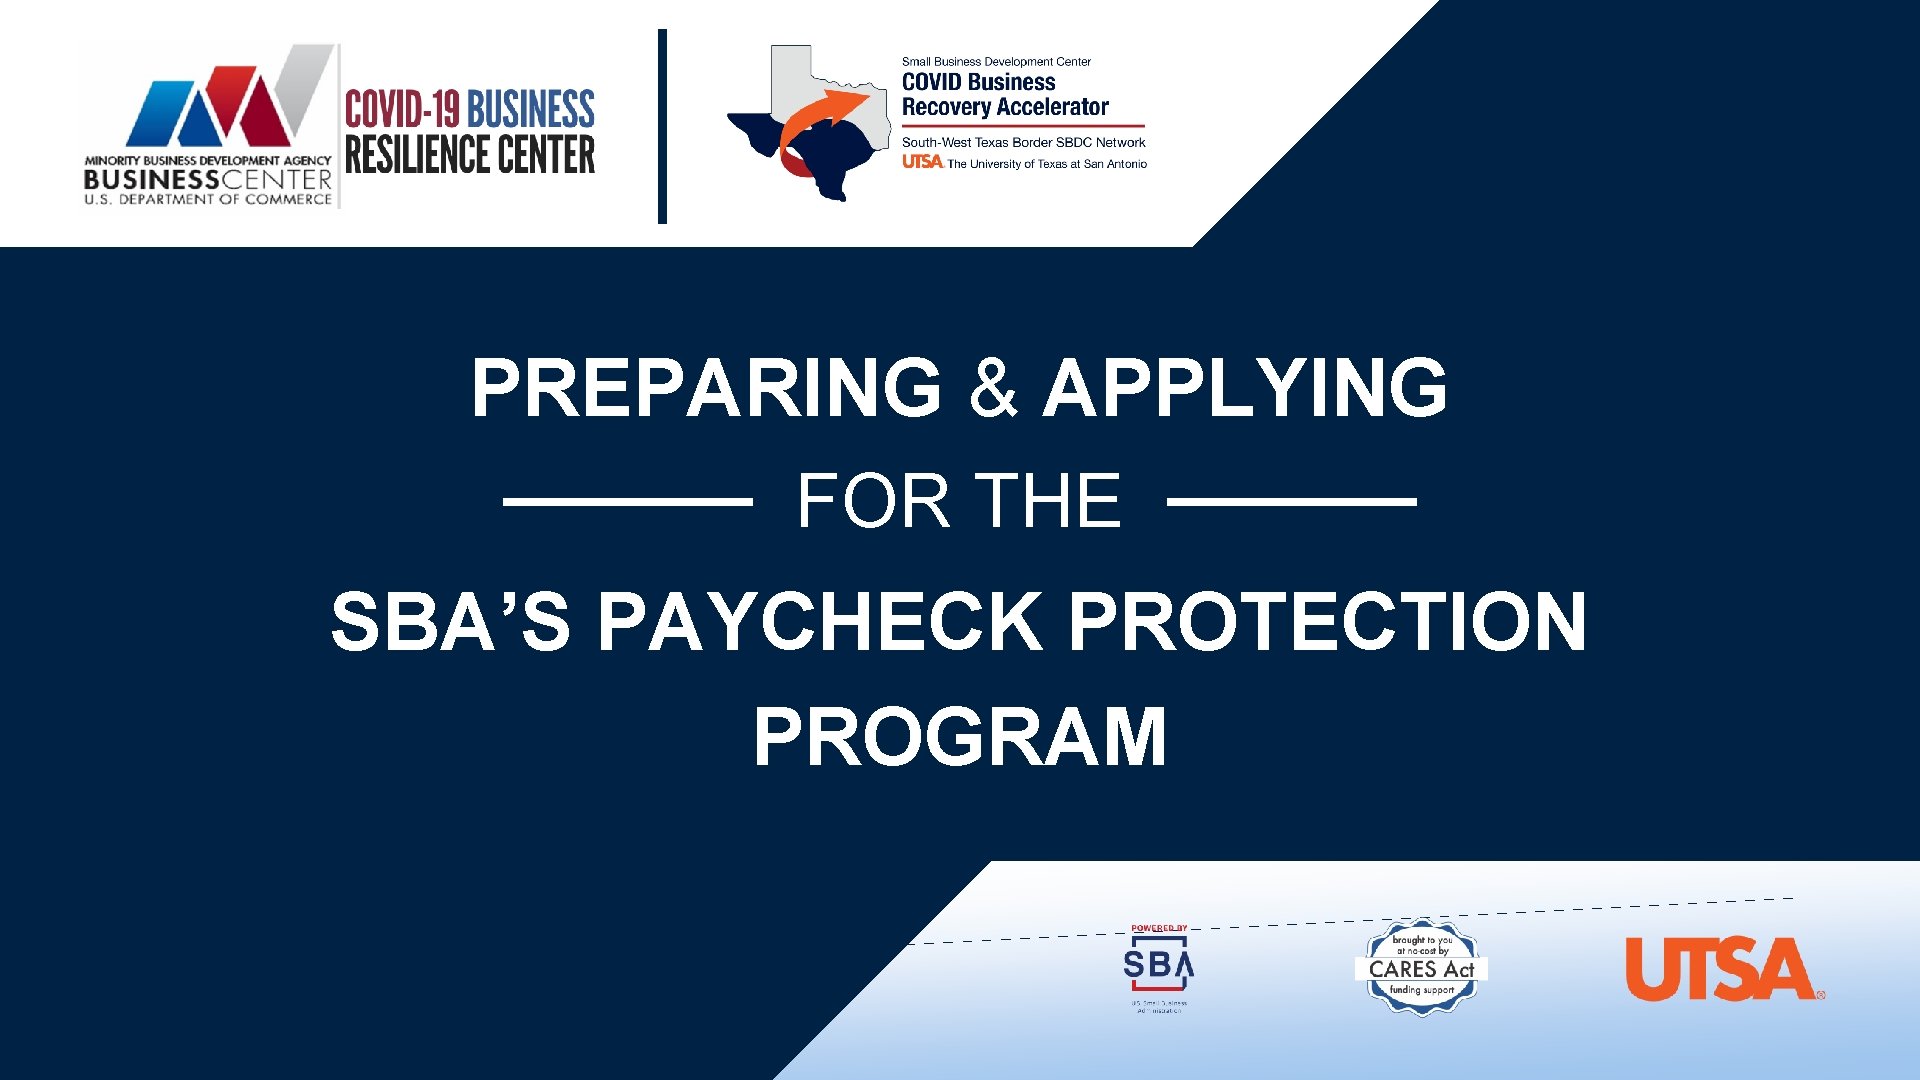 PREPARING & APPLYING FOR THE SBA’S PAYCHECK PROTECTION PROGRAM 